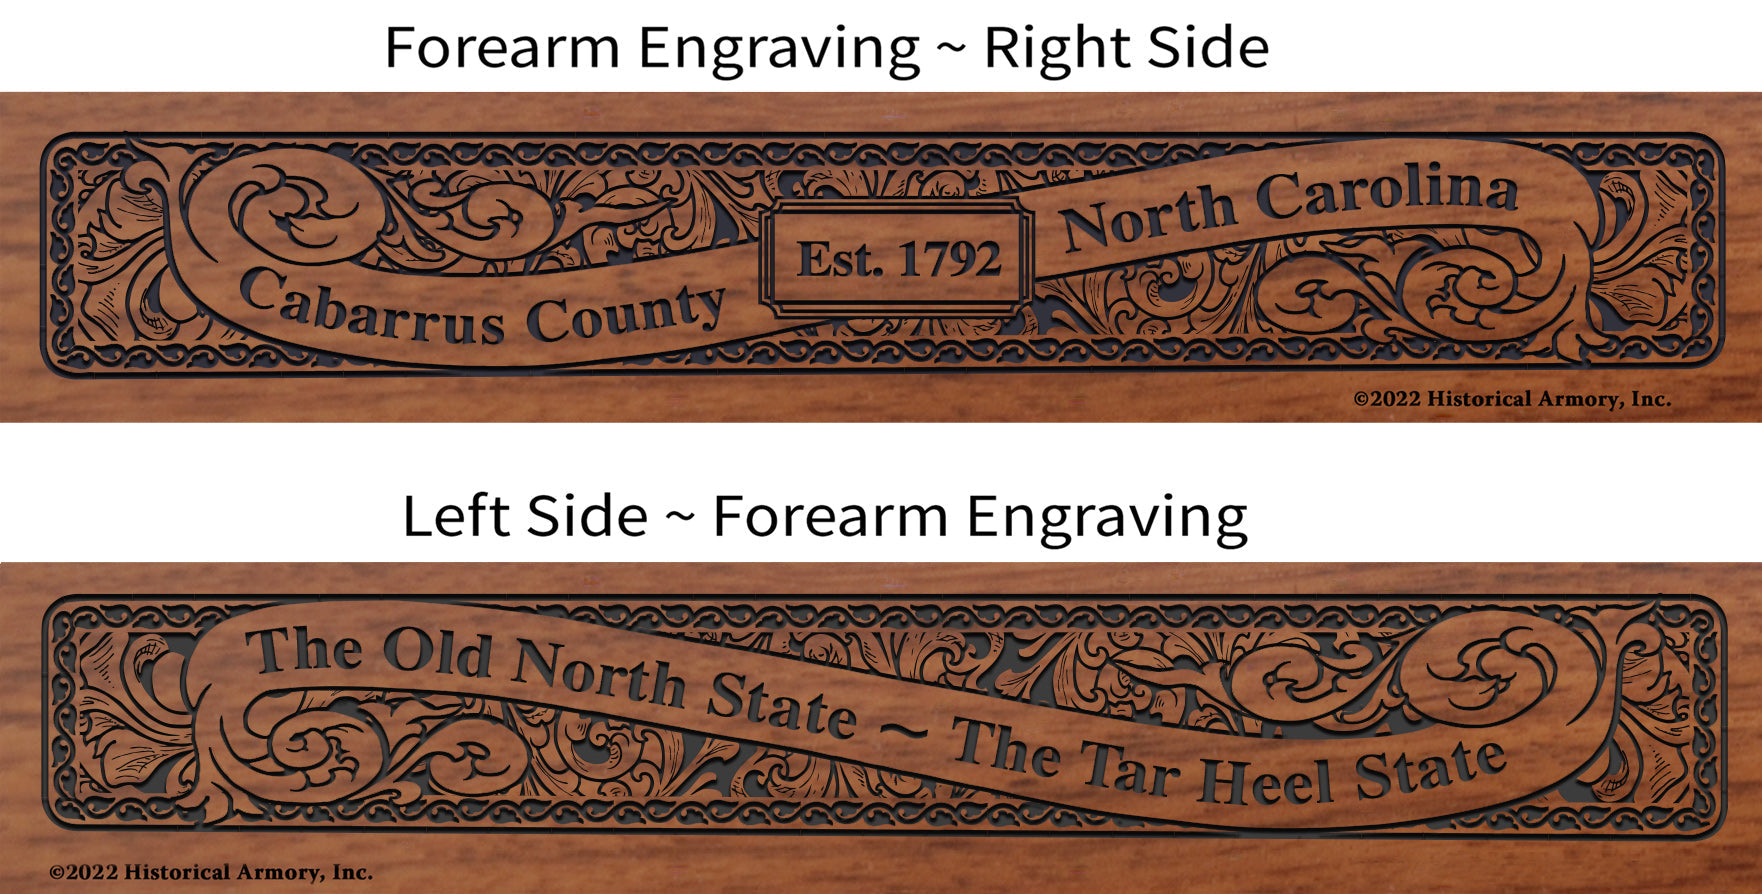 Cabarrus County North Carolina Engraved Rifle Forearm